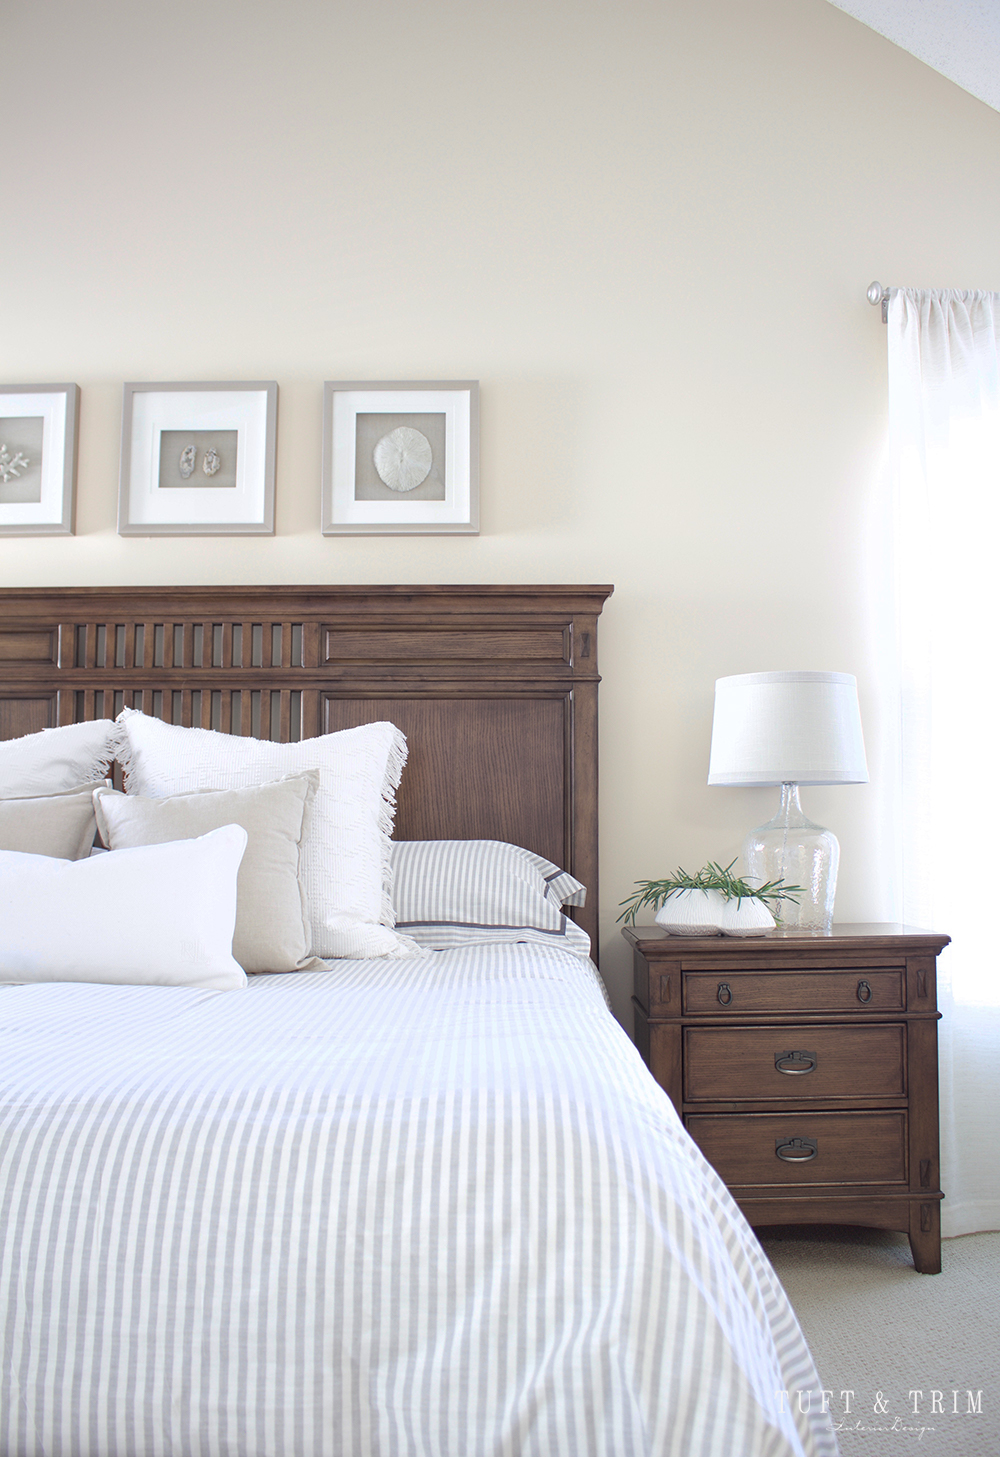 Rooms We Love Tour: Coastal Bedroom Makeover by Tuft & Trim Interior Design